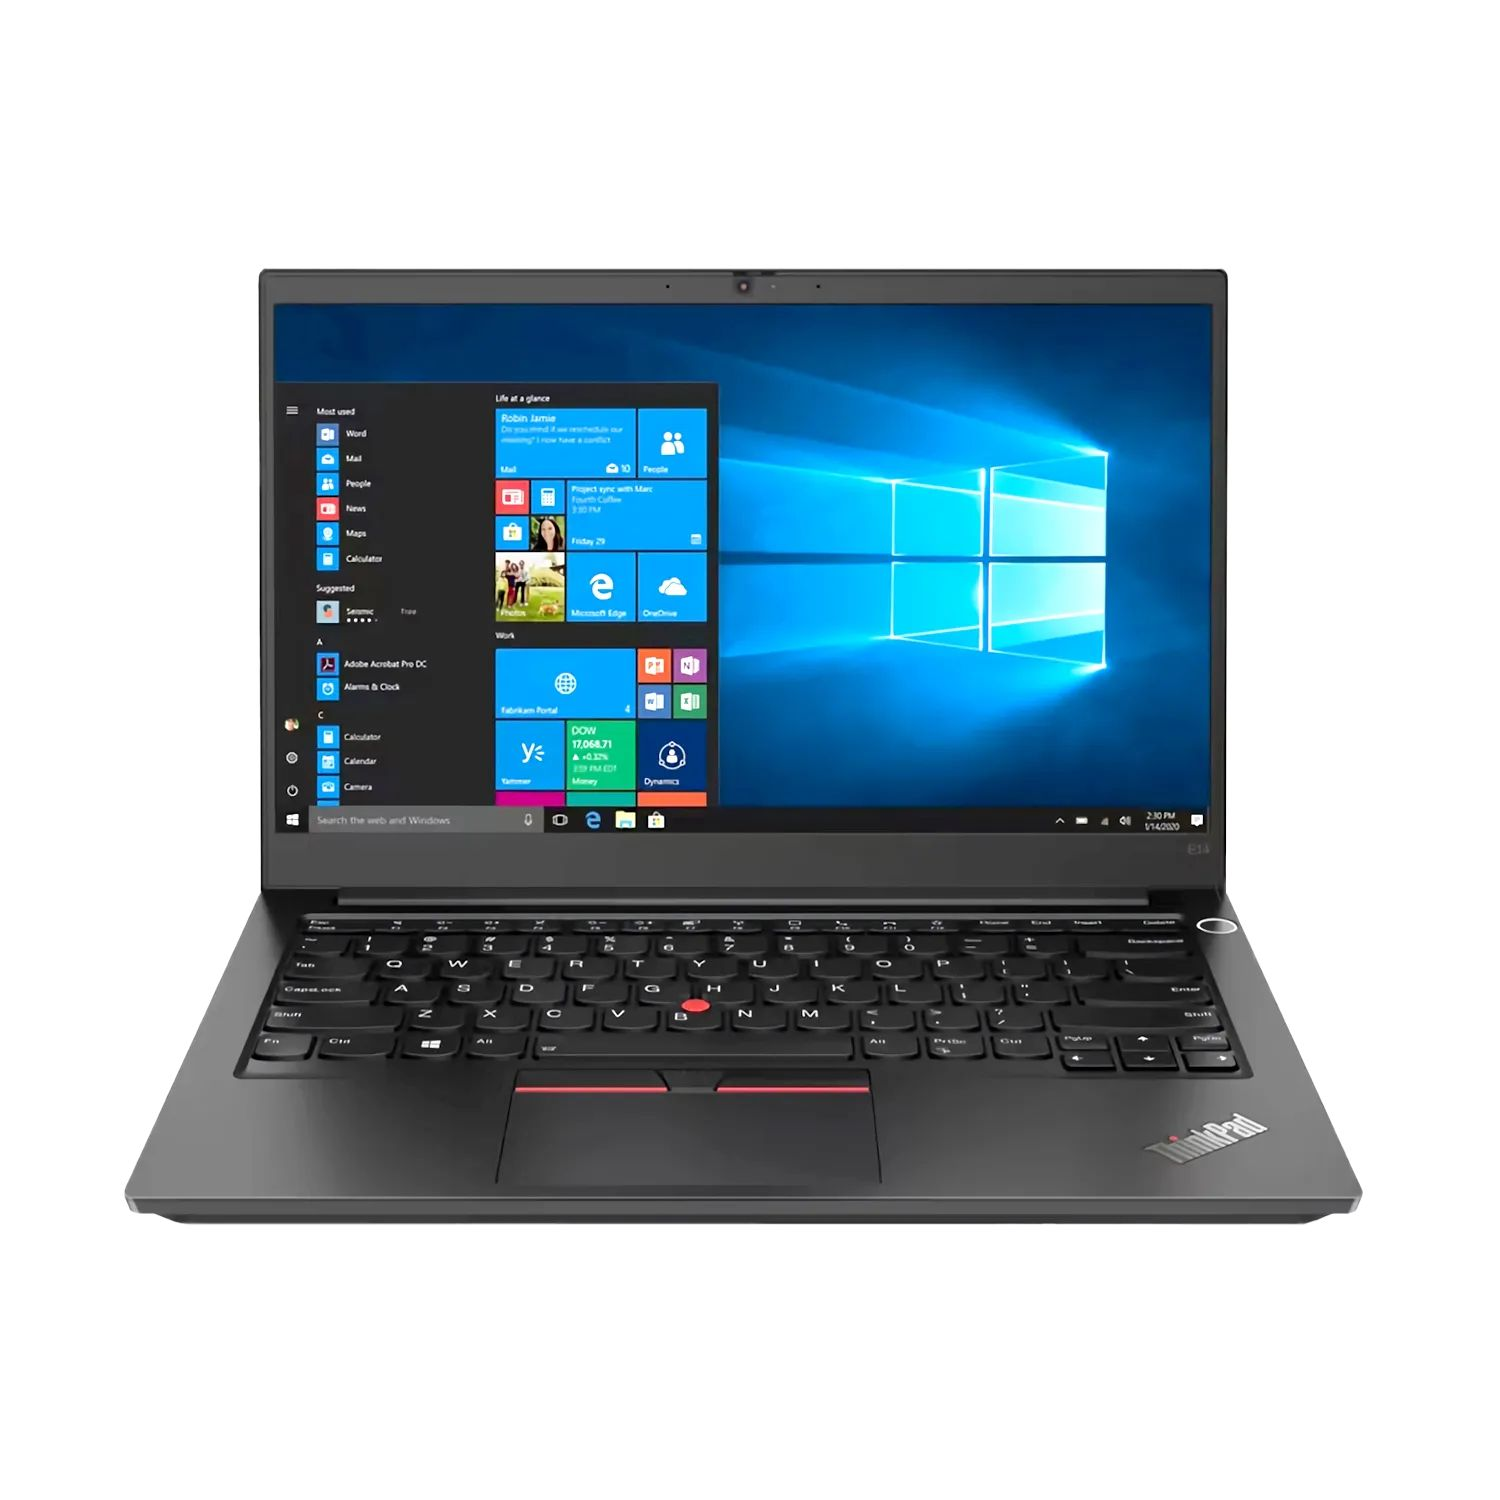 Display, 5 2021 Notebook AMD 14 GB Ryzen™ Zoll ThinkPad Prozessor, SSD, mit eingerichtet, RAM, GB fertig Schwarz LENOVO E14, 2000 Office Pro, 12